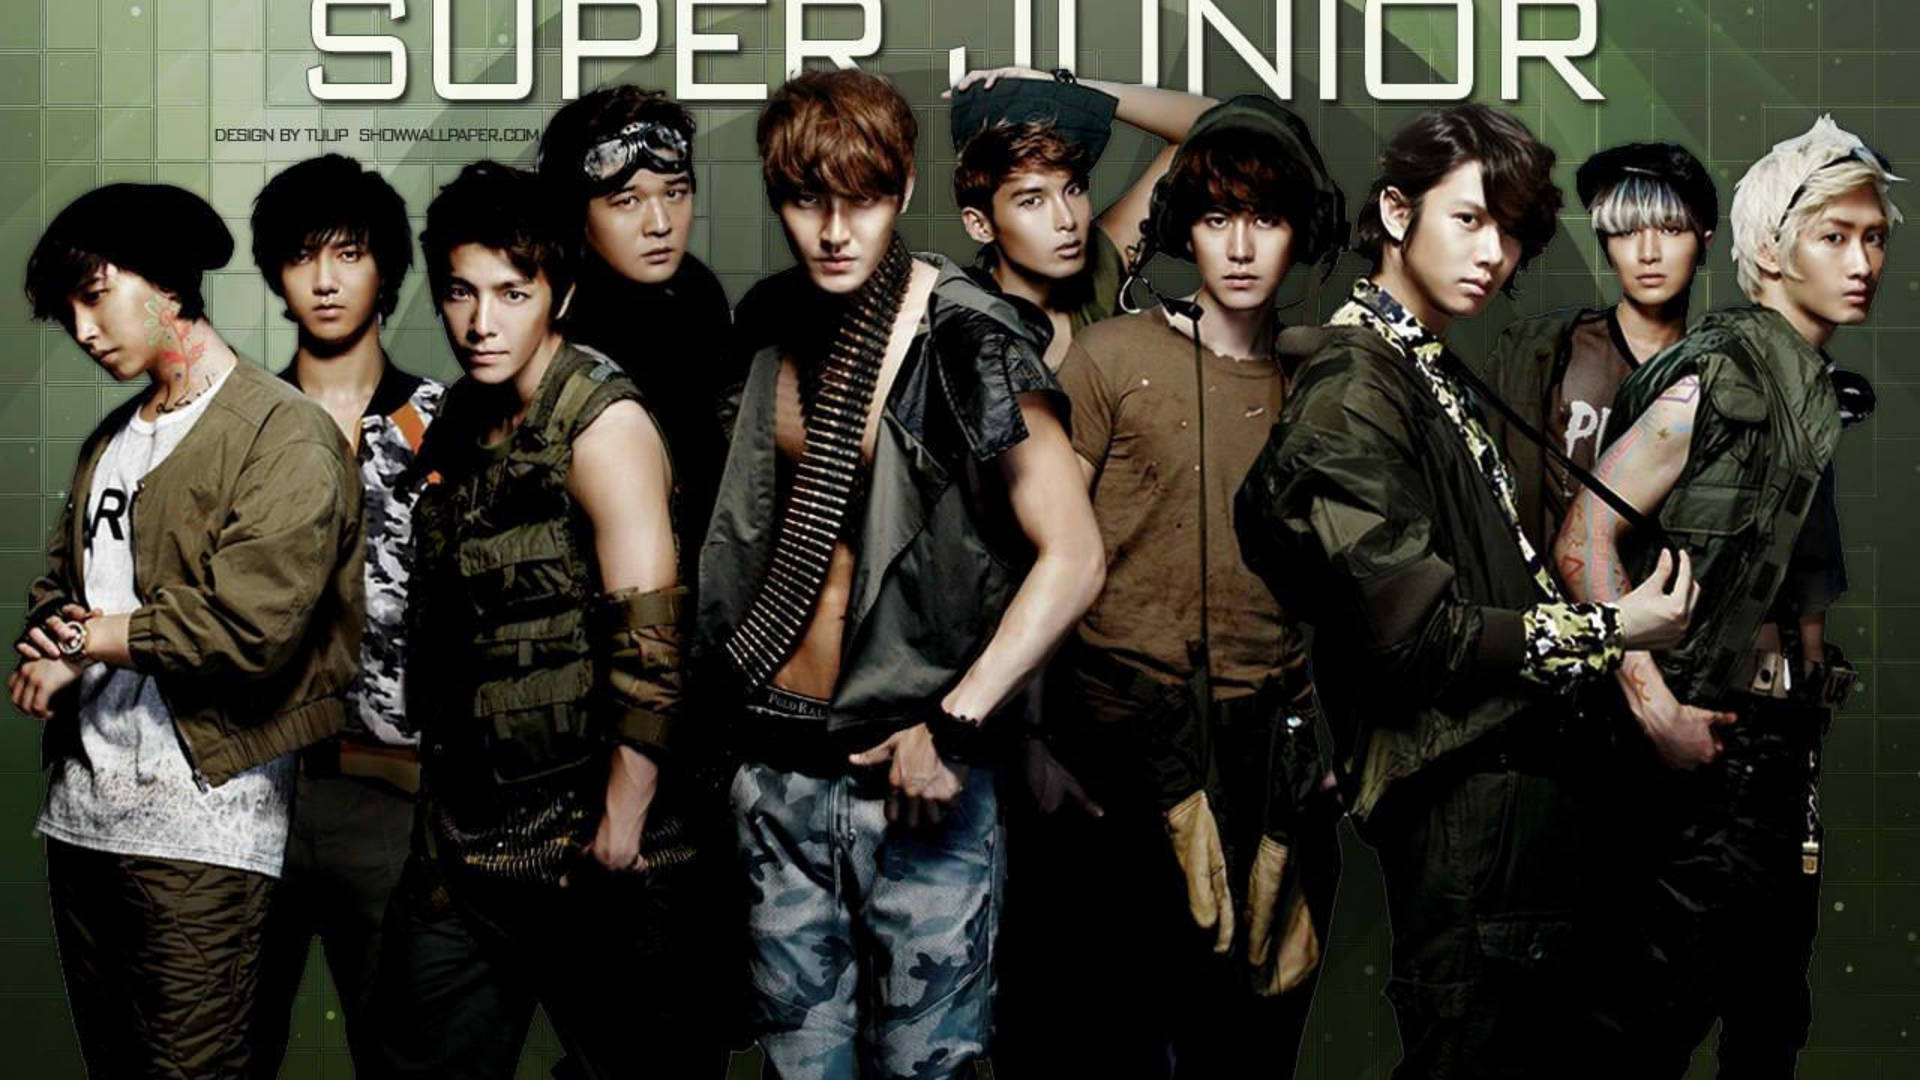 Super Junior At Concert - The Kings Of Hallyu Wave Background